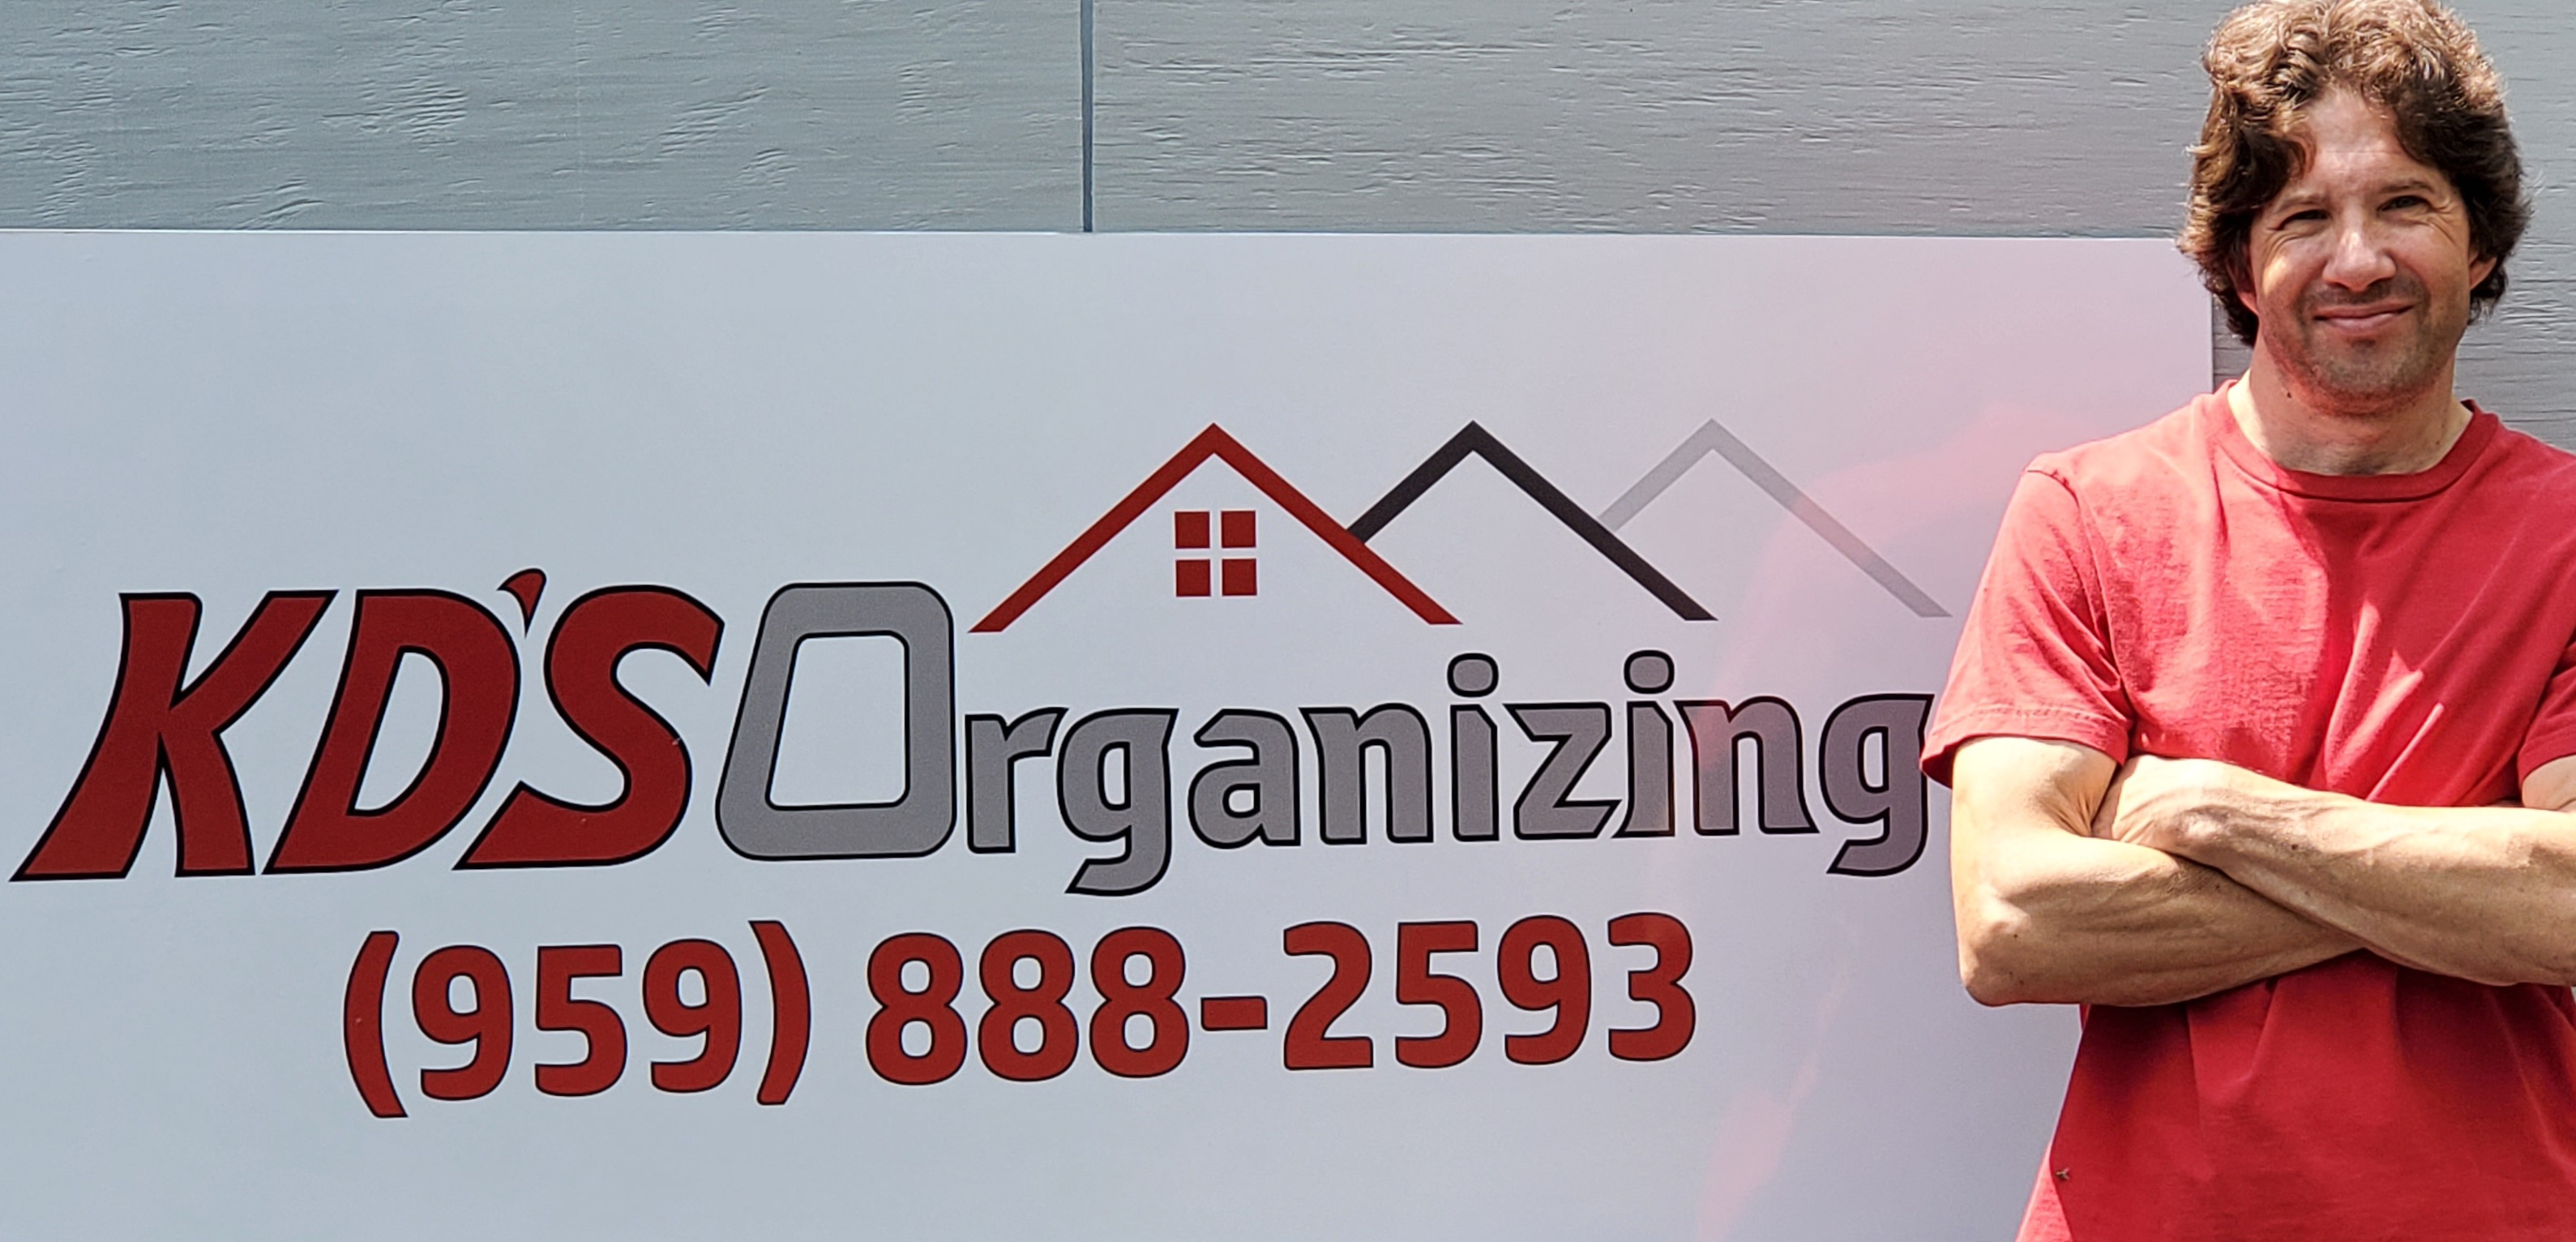 KD's Organizing, LLC Logo